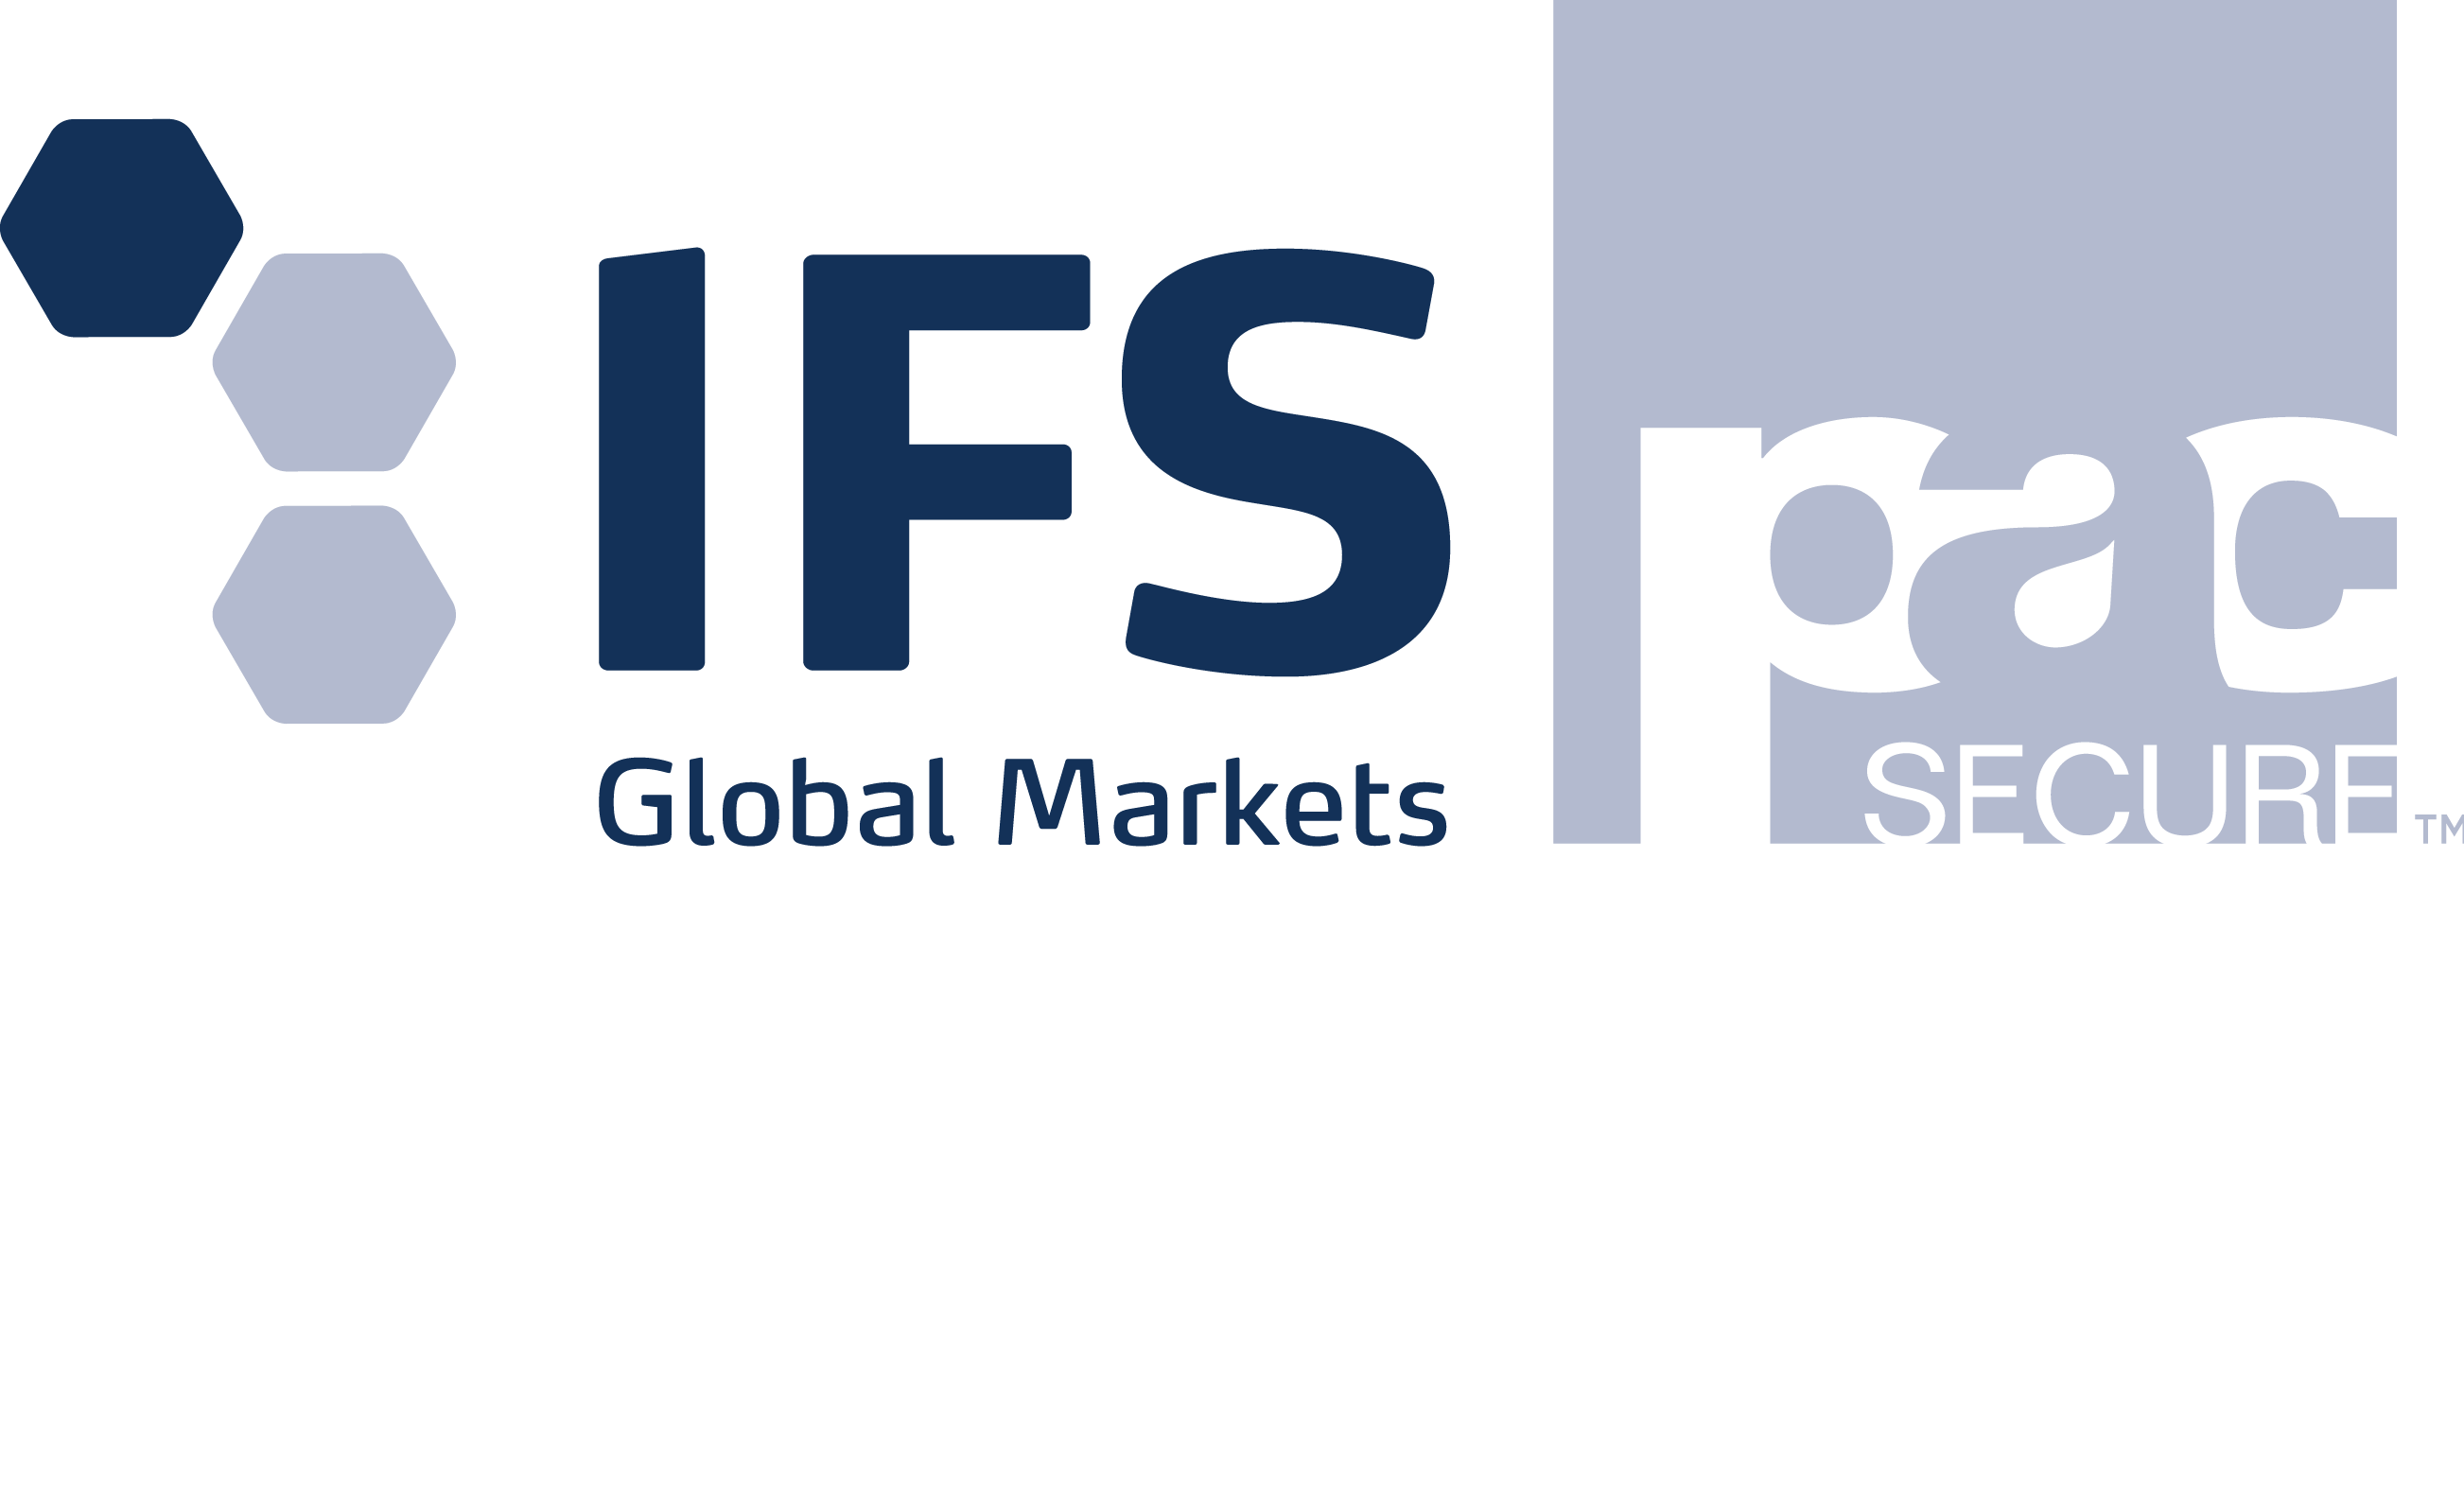 Software for IFS International Food Standard management eGAM